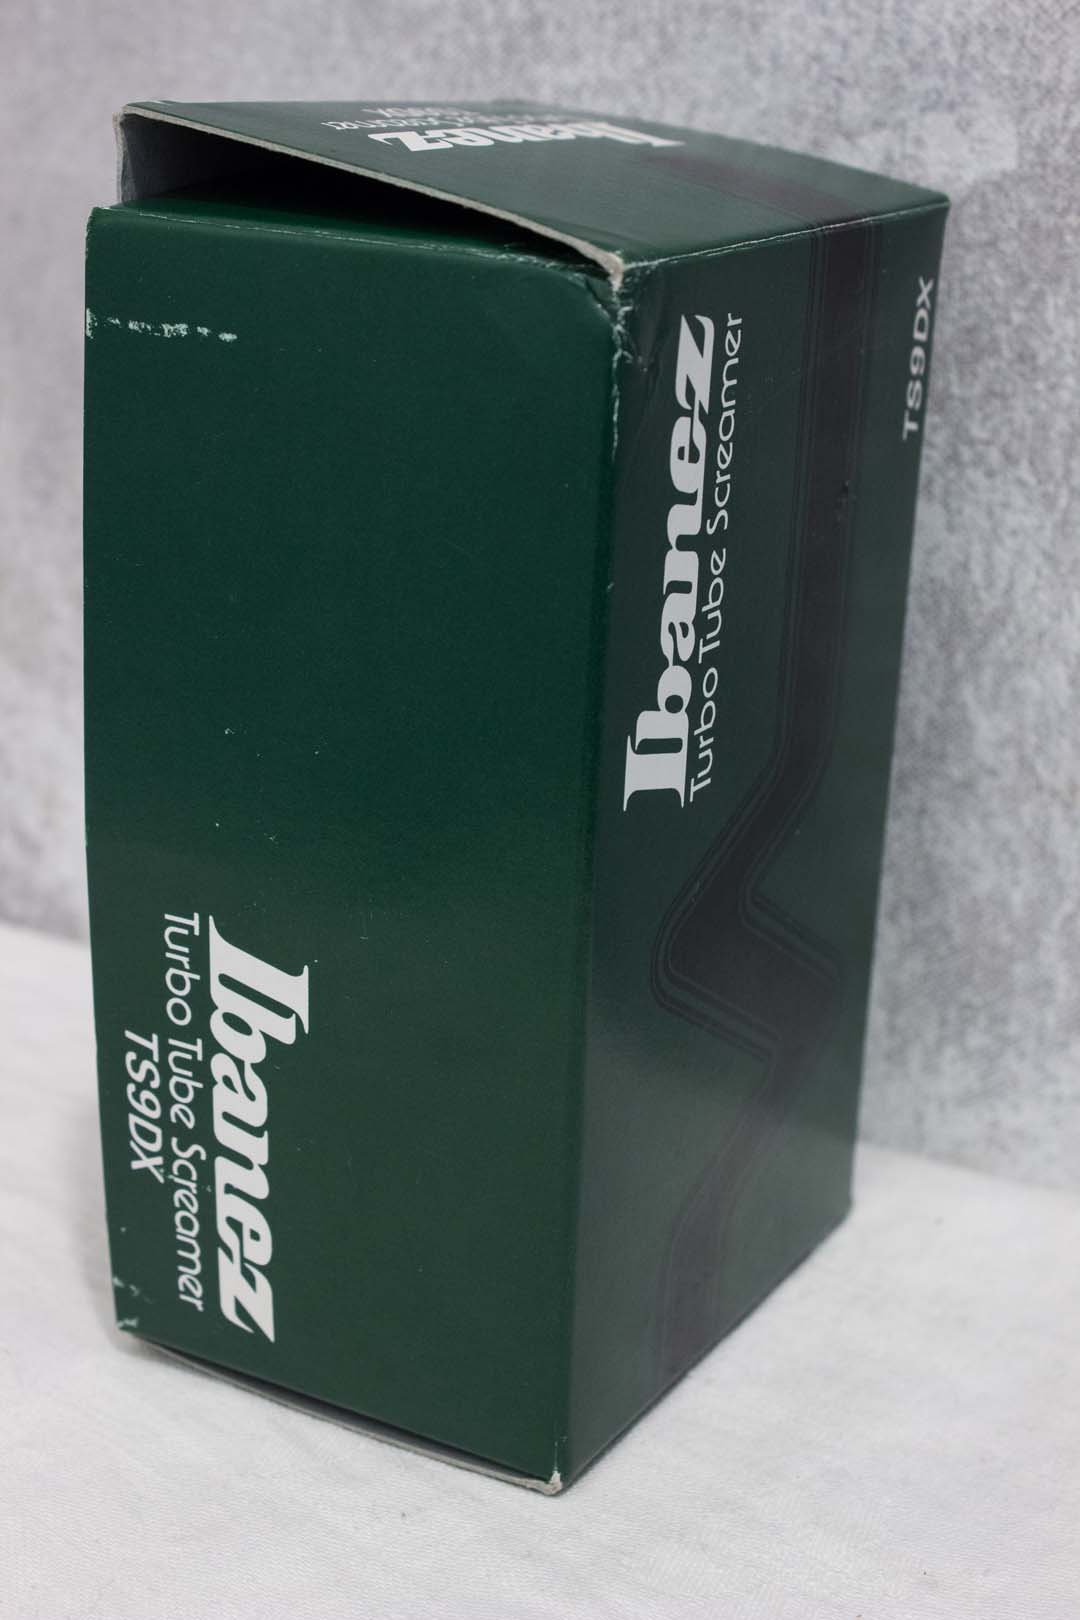 Ibanez TS9DX Turbo Tube Screamer Overdrive Pedal